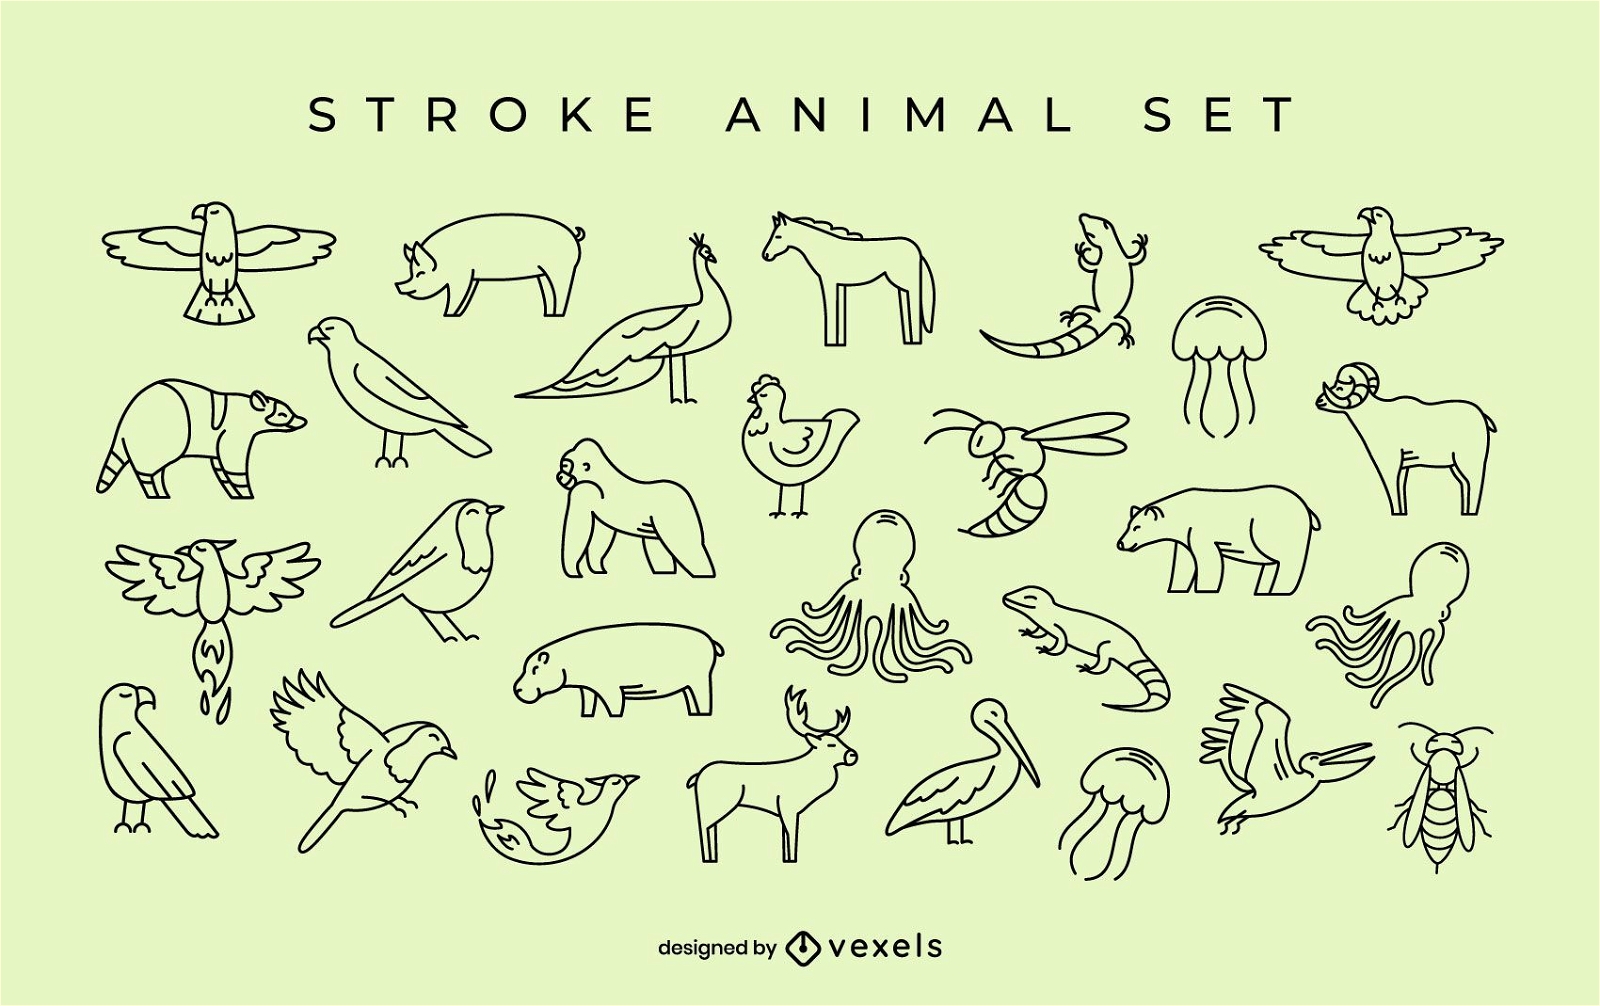 Simple animal stroke set